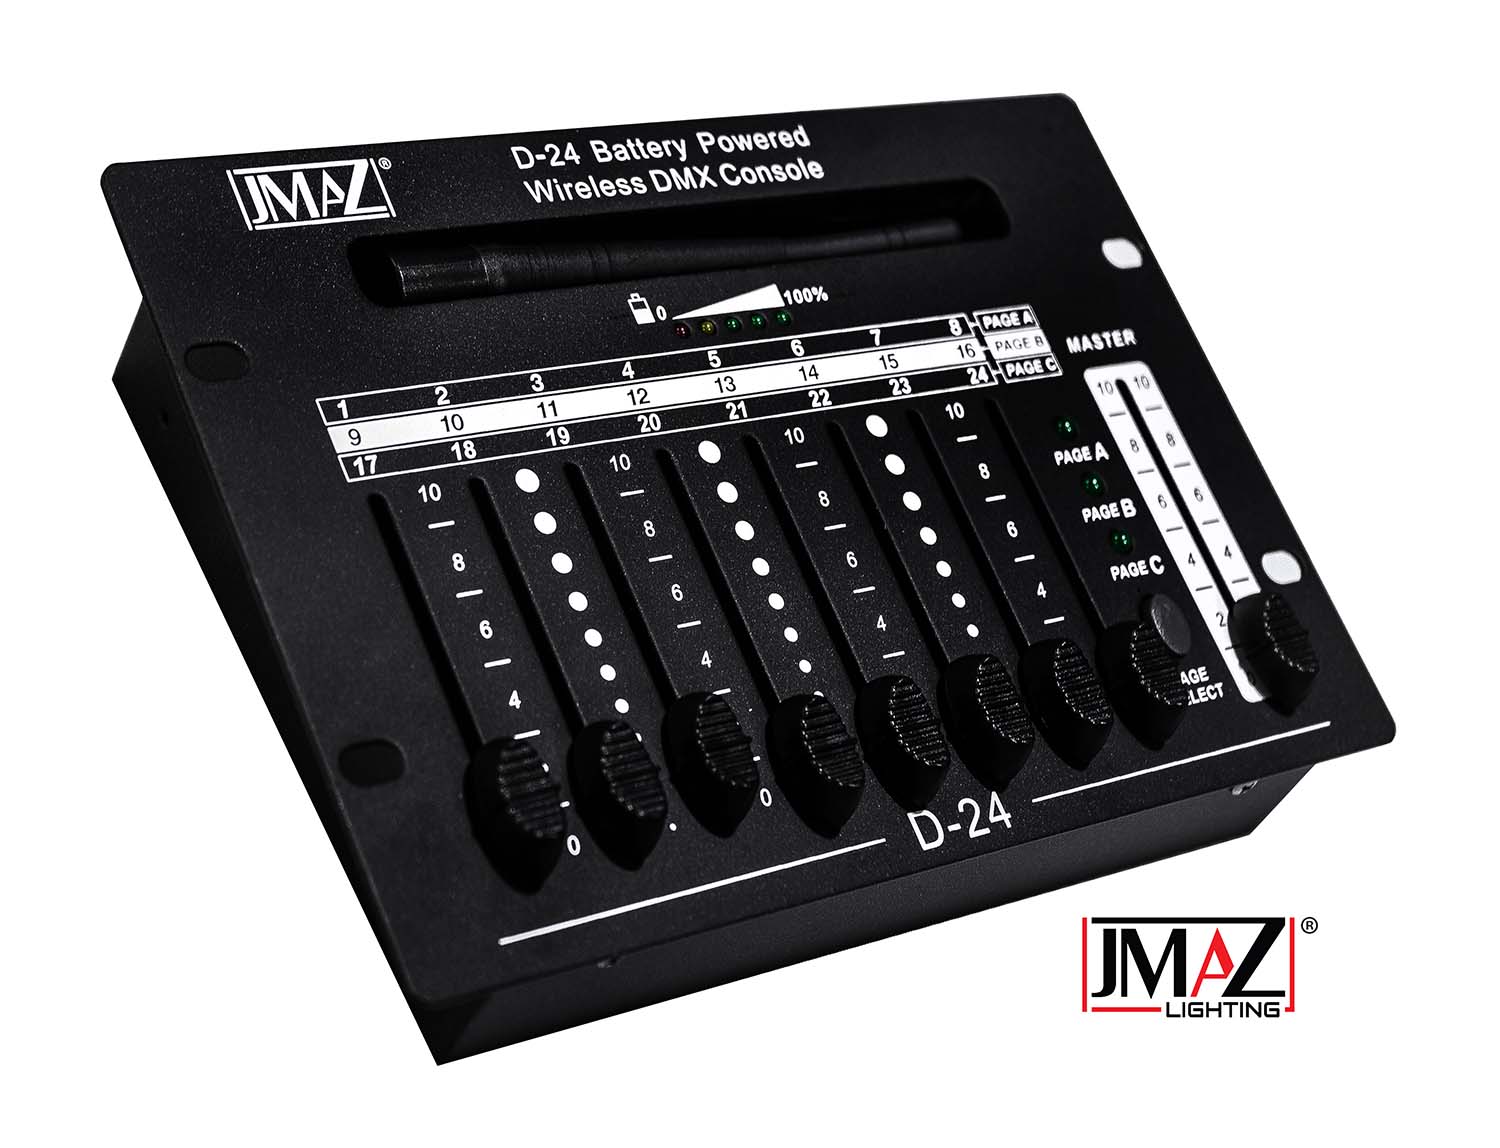 JMAZ JZ6001 D-24 Wireless DMX Controller Battery Powered with 24 Channel and 20 Hour Battery Life JMAZ